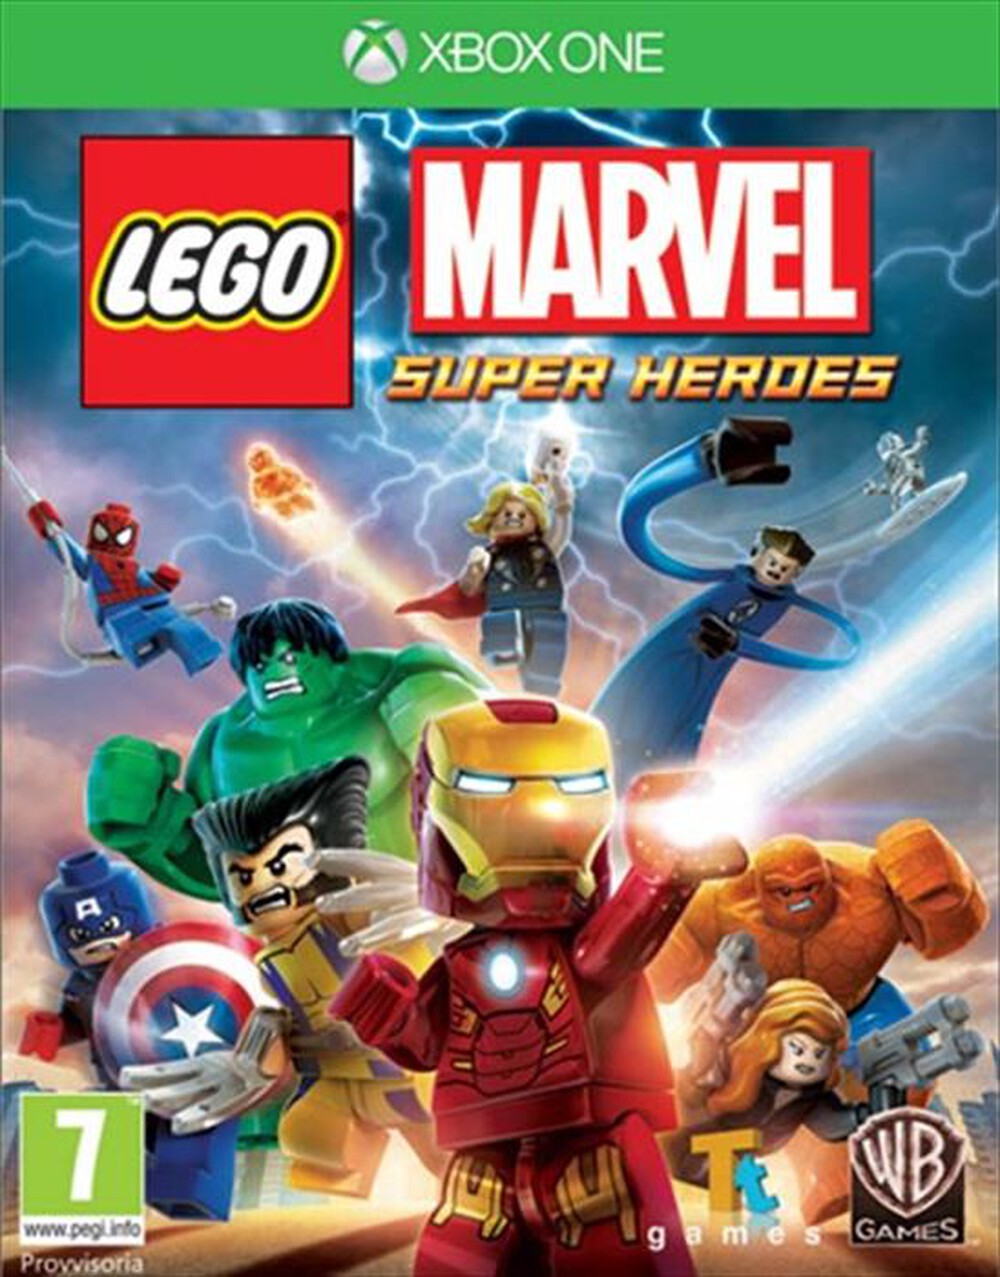 "WARNER GAMES - Lego Marvel Super Heroes Xbox One"